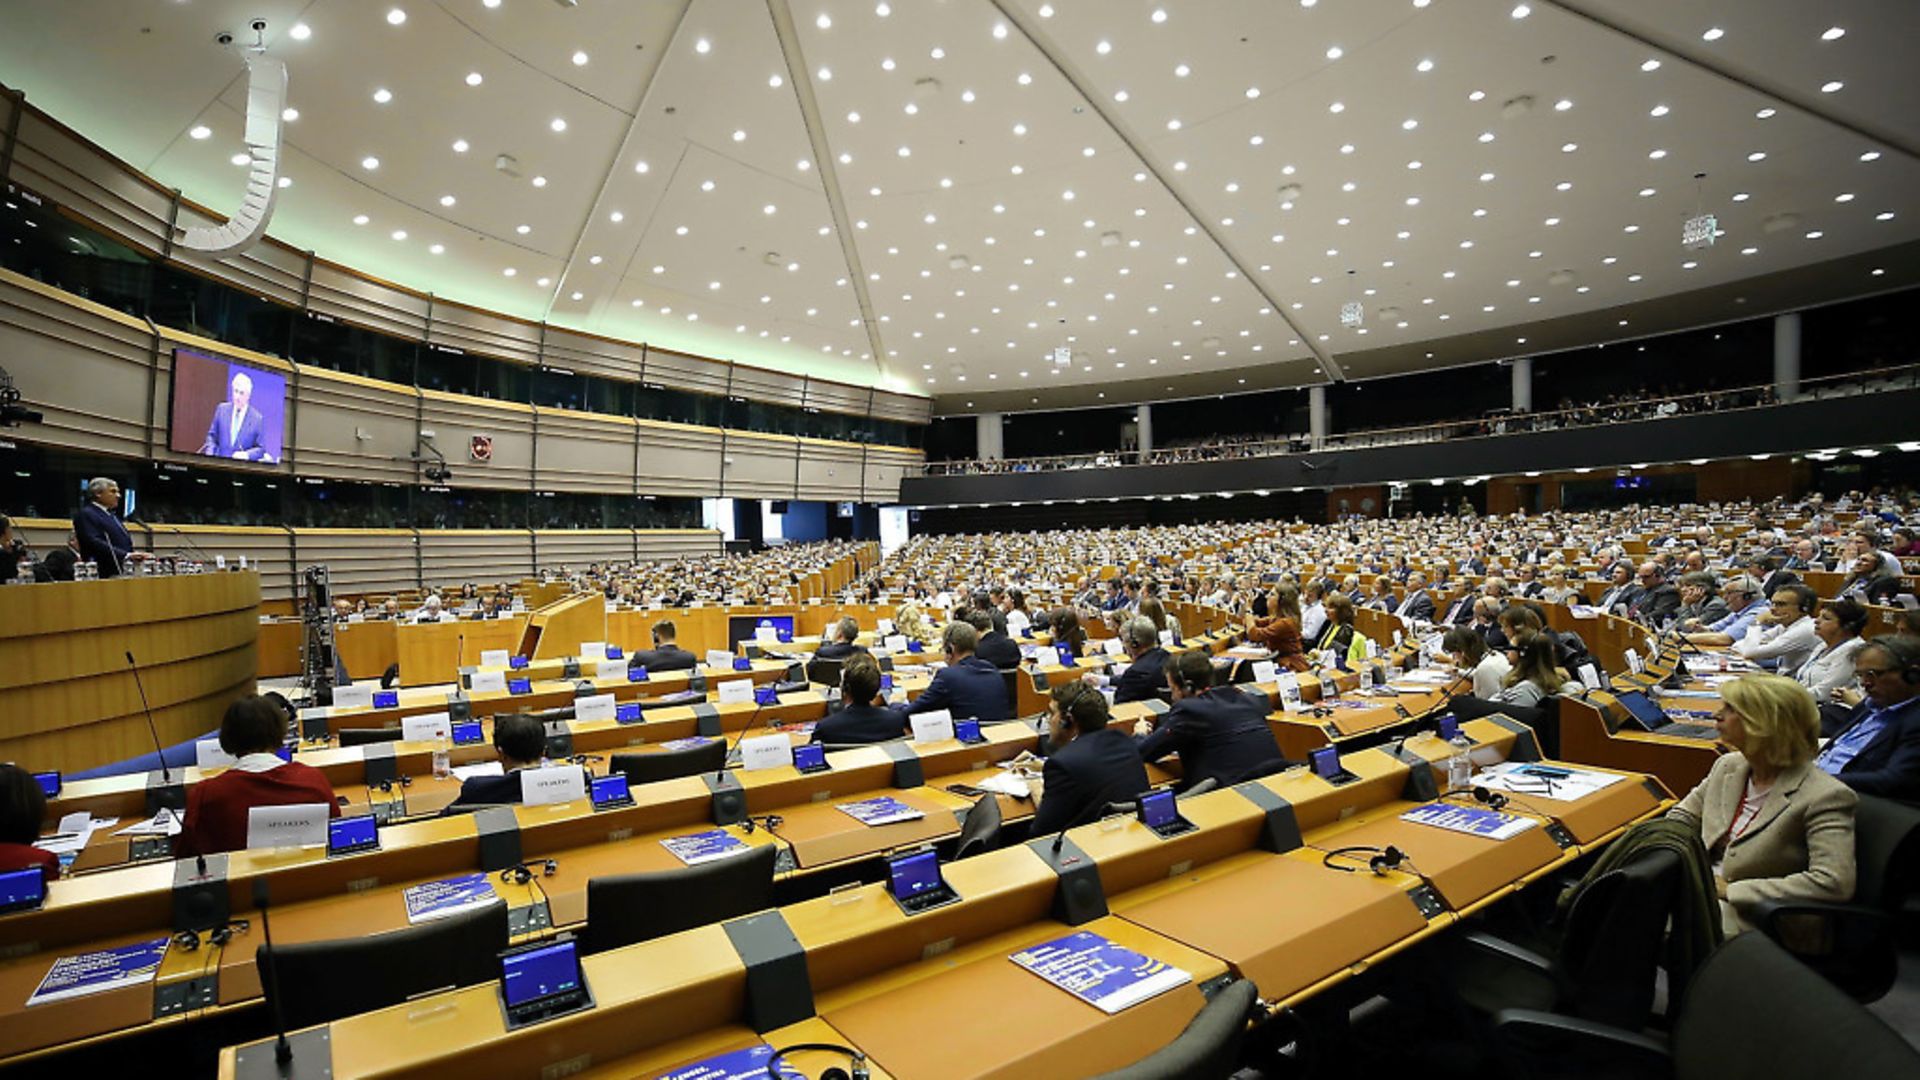 MEPs voting in the European Parliament. Photo: Dursun Aydemir/Anadolu Agency/Getty Images